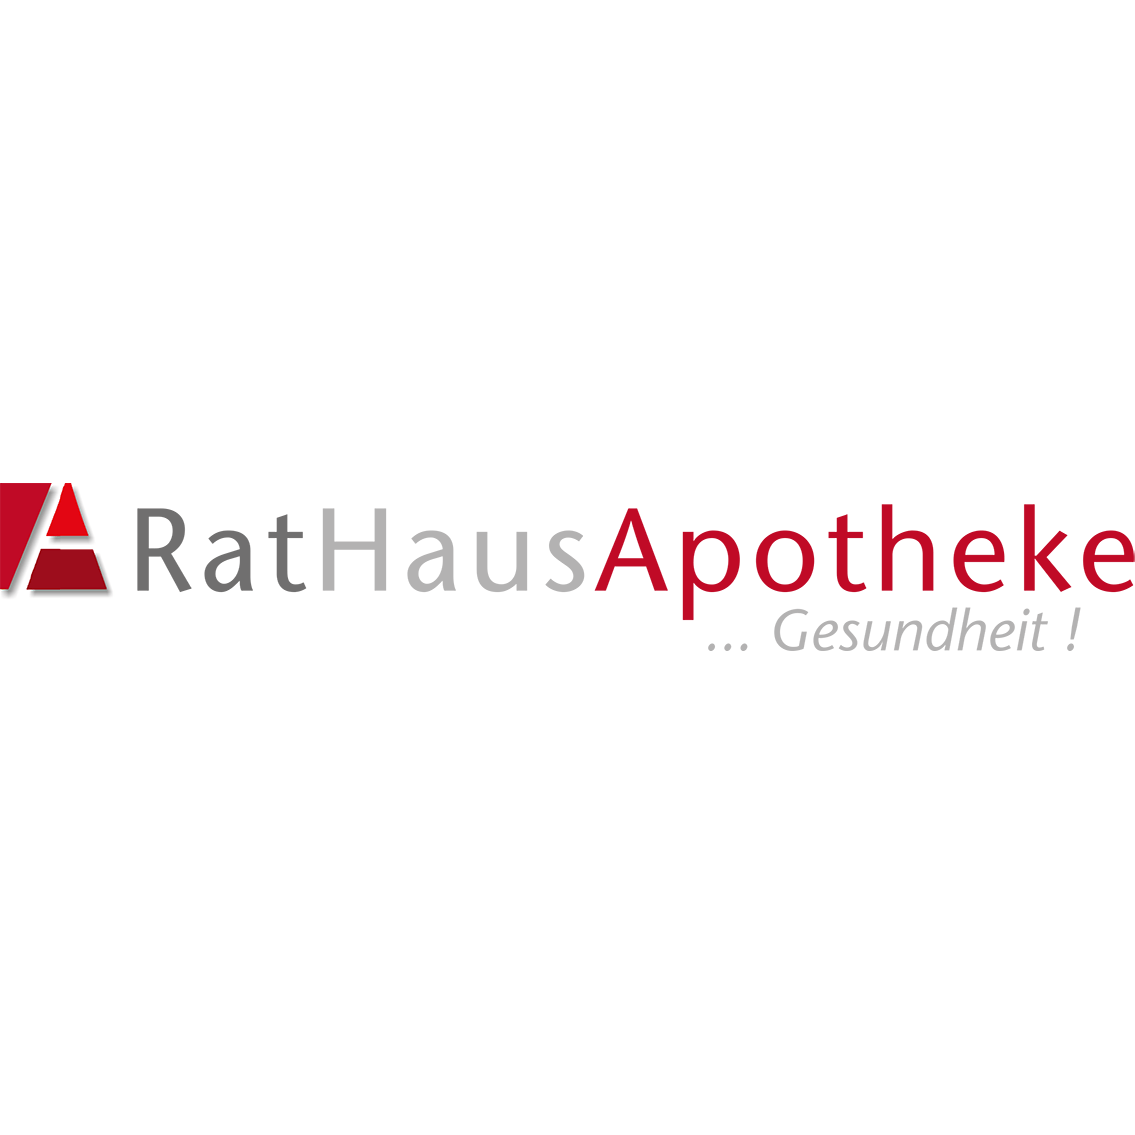 Rathaus-Apotheke in Essen - Logo